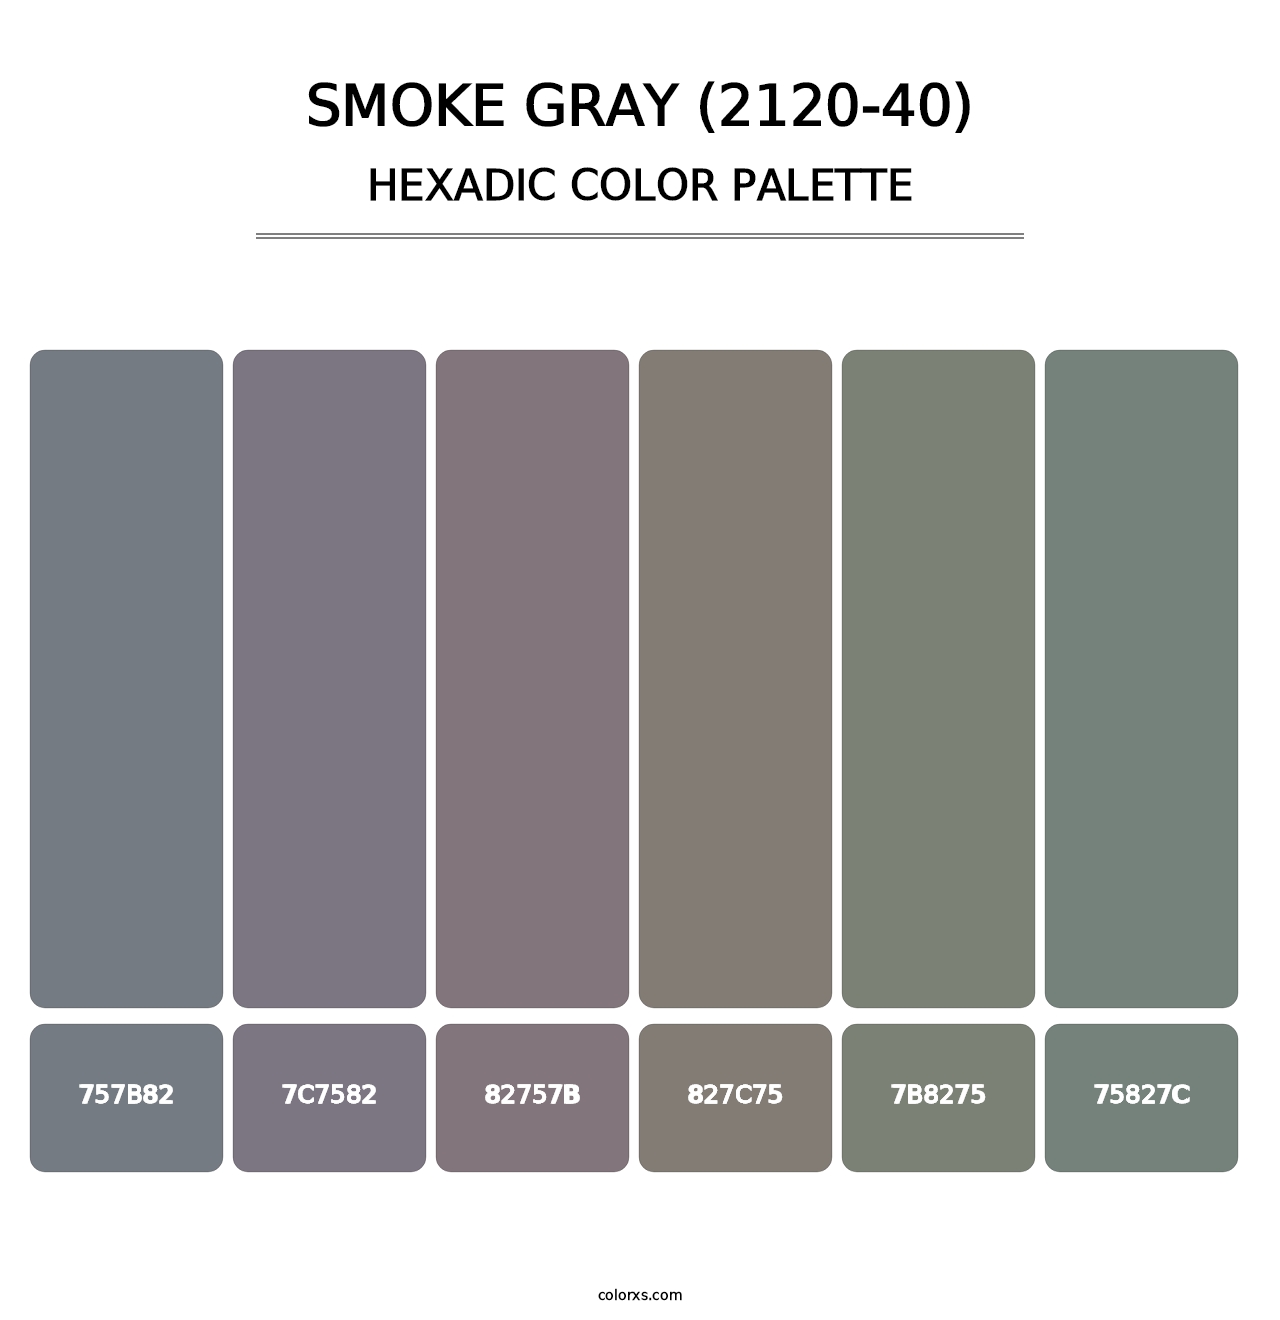 Smoke Gray (2120-40) - Hexadic Color Palette